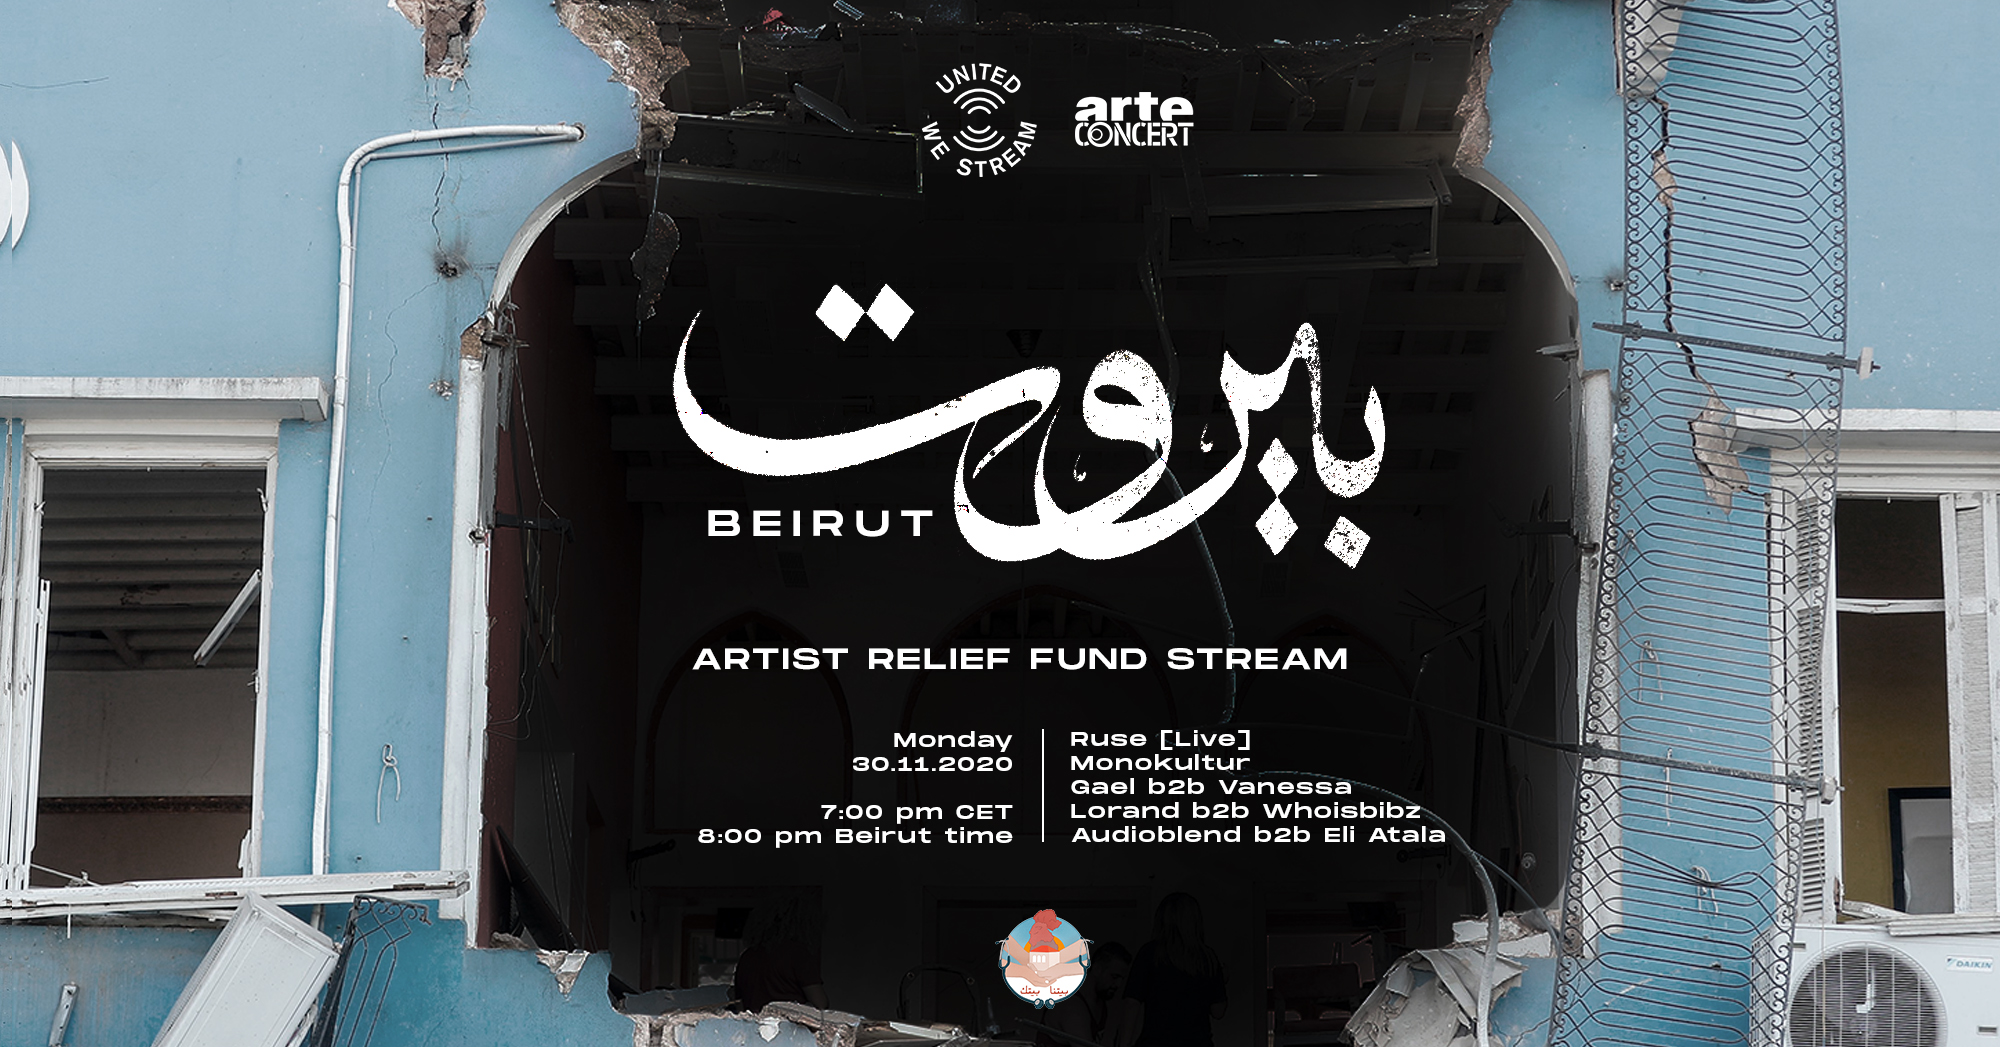 United We Stream & ARTE Concert to Host Beirut Charity Livestream on November 30th